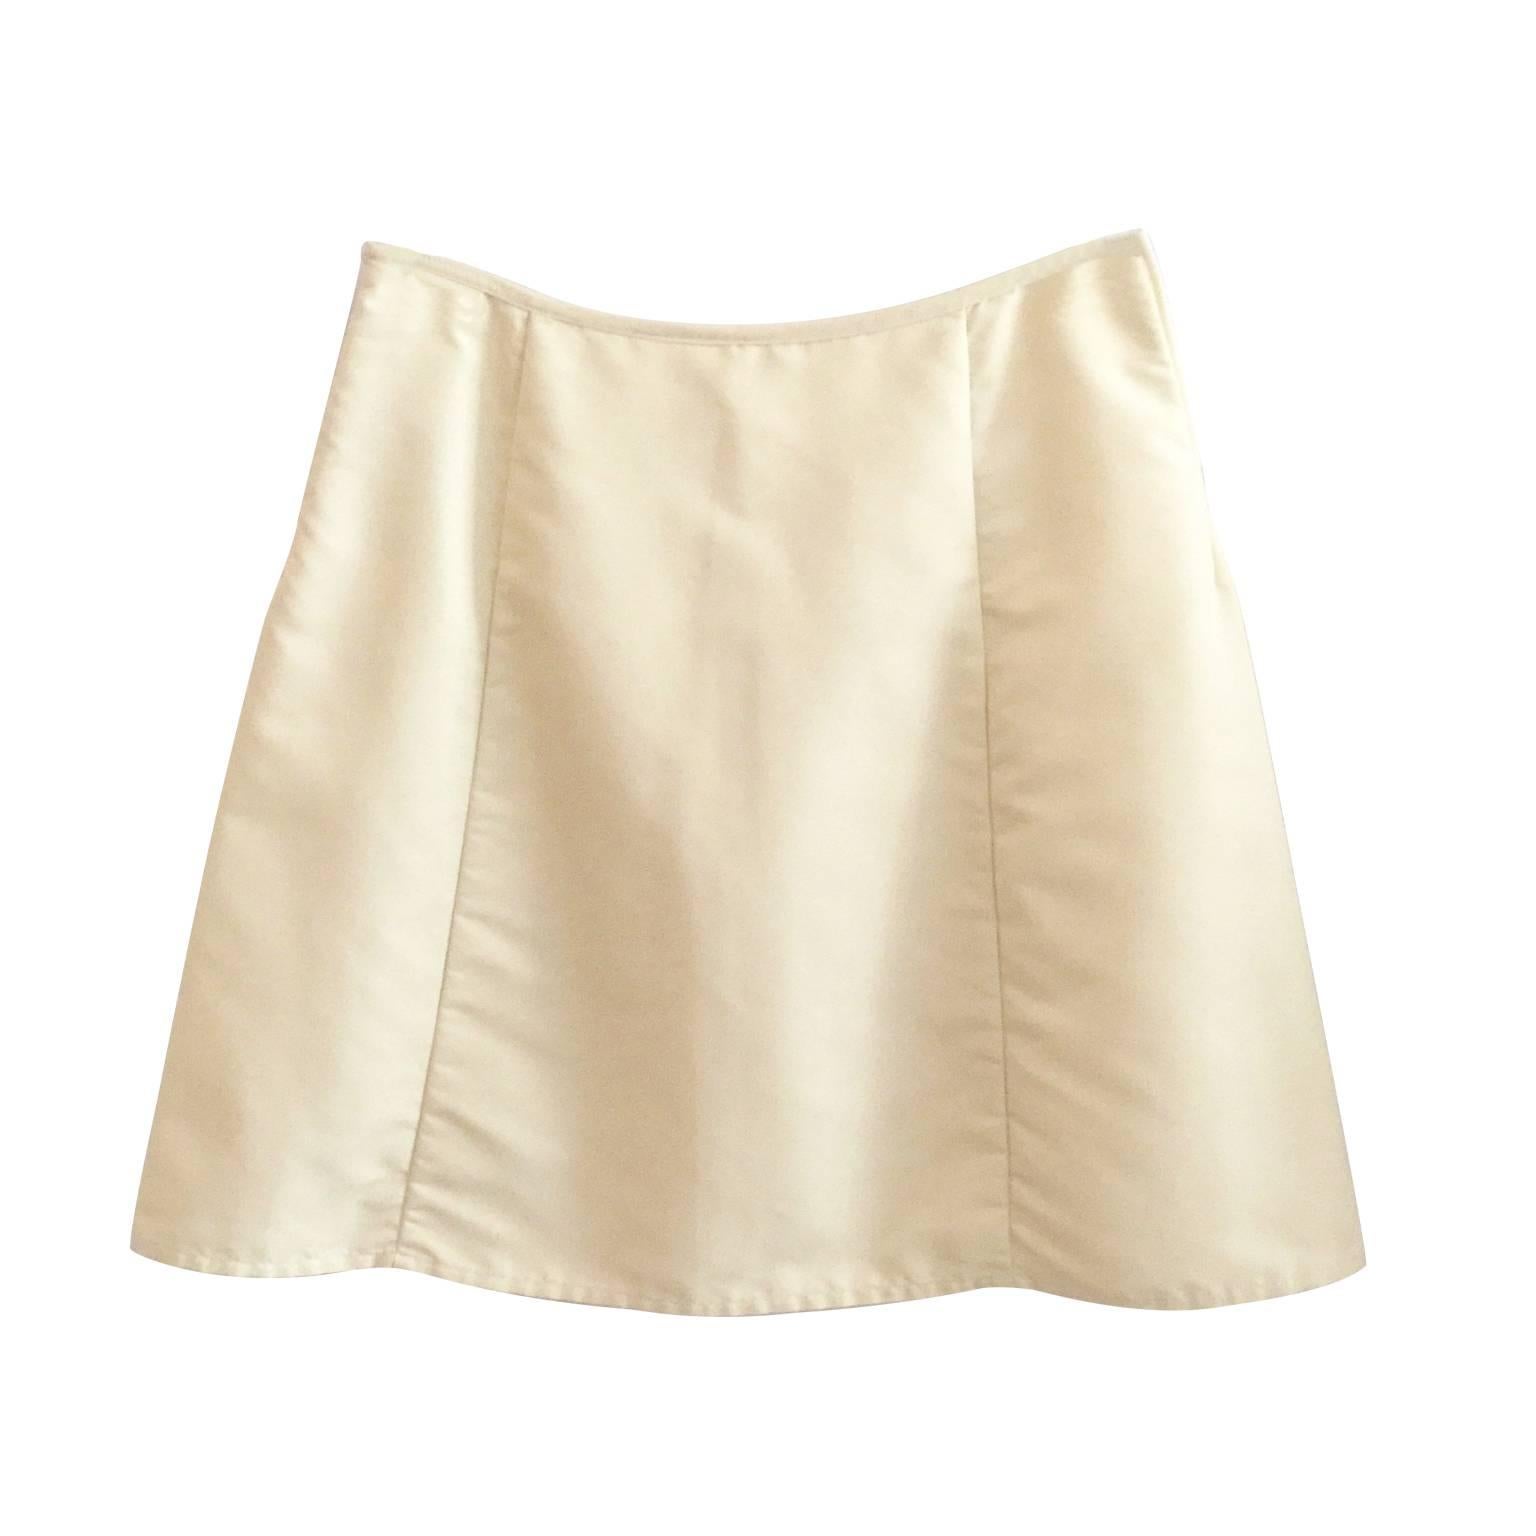 Helmut Lang nylon light cream beige mini skirt from circa 1997.
Original size : 42 Italian ( 6 US, 38 EU)
Measurements :
Waist : 36cm
Hem : 64 cm
Length : 50cm 
